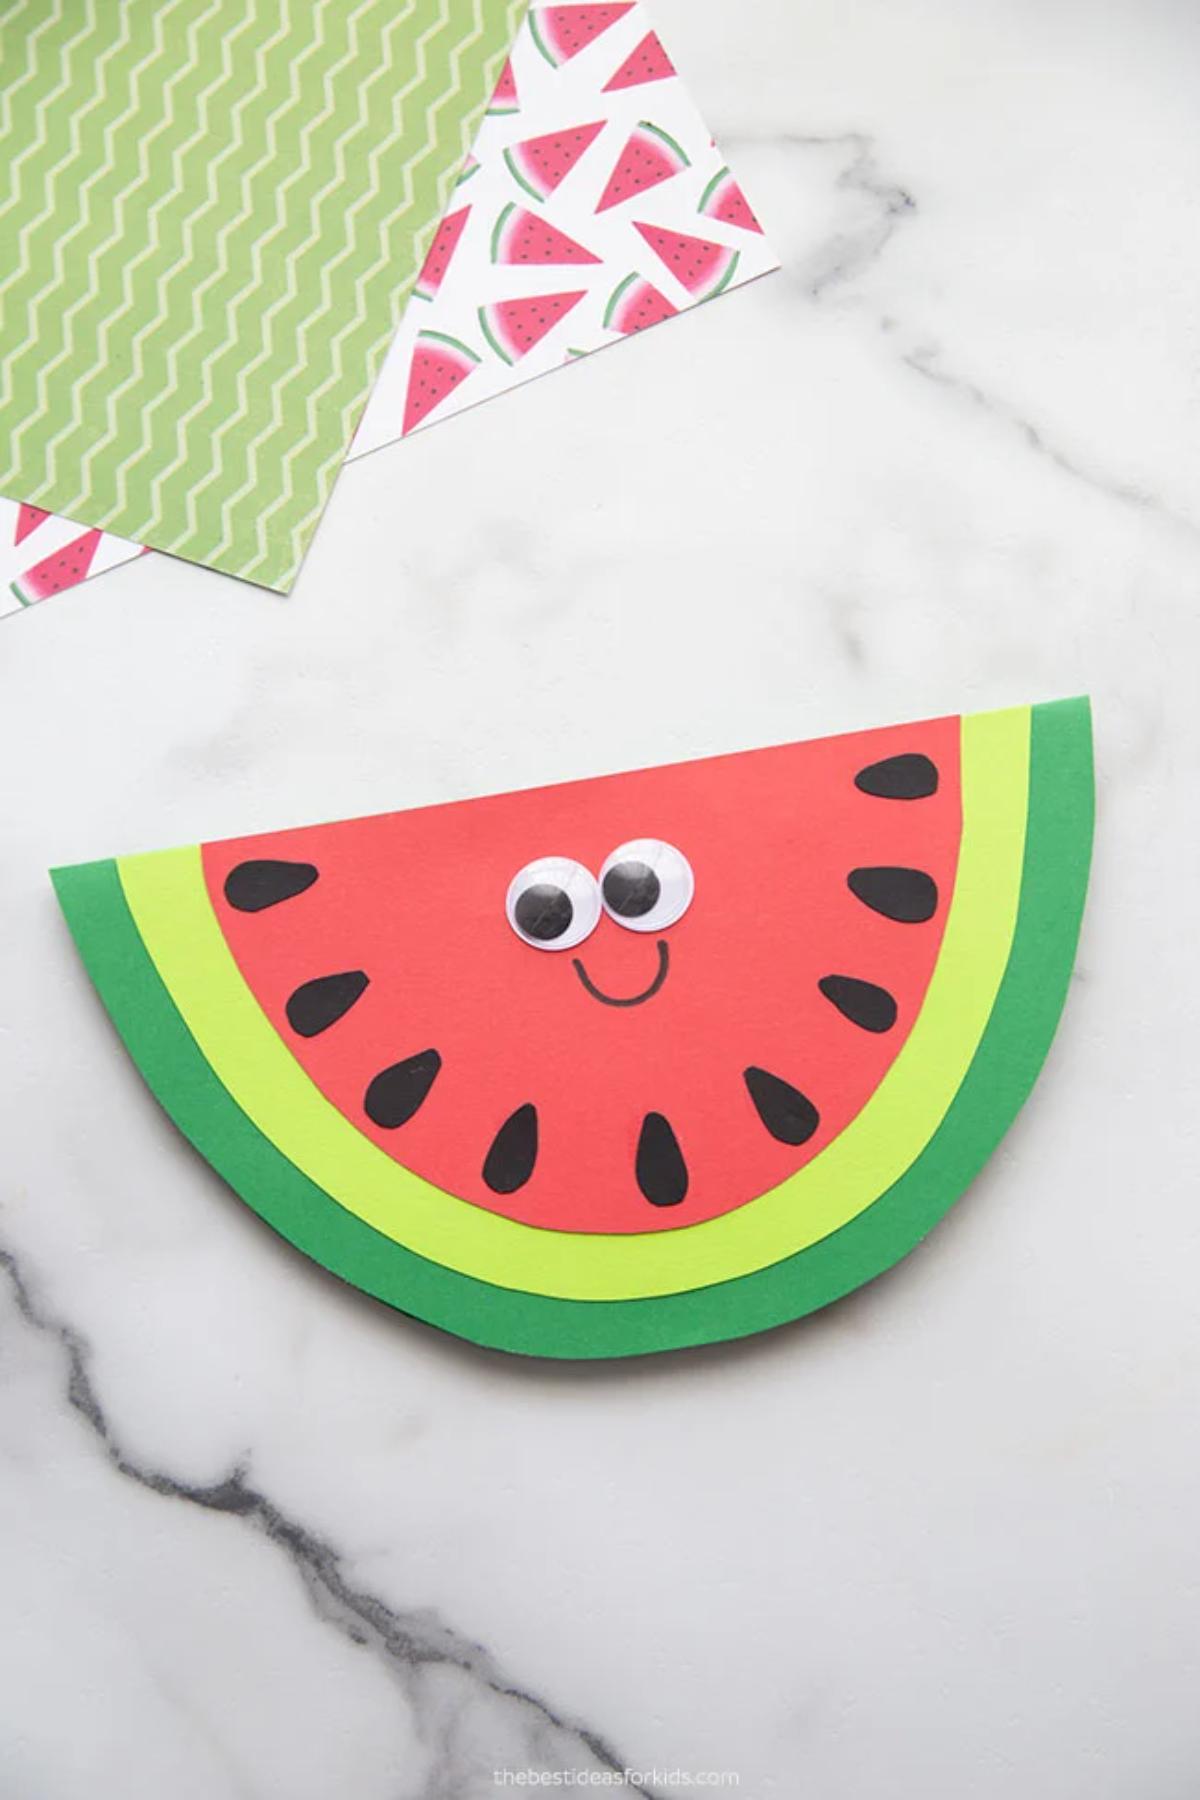 Paper Watermelon Craft